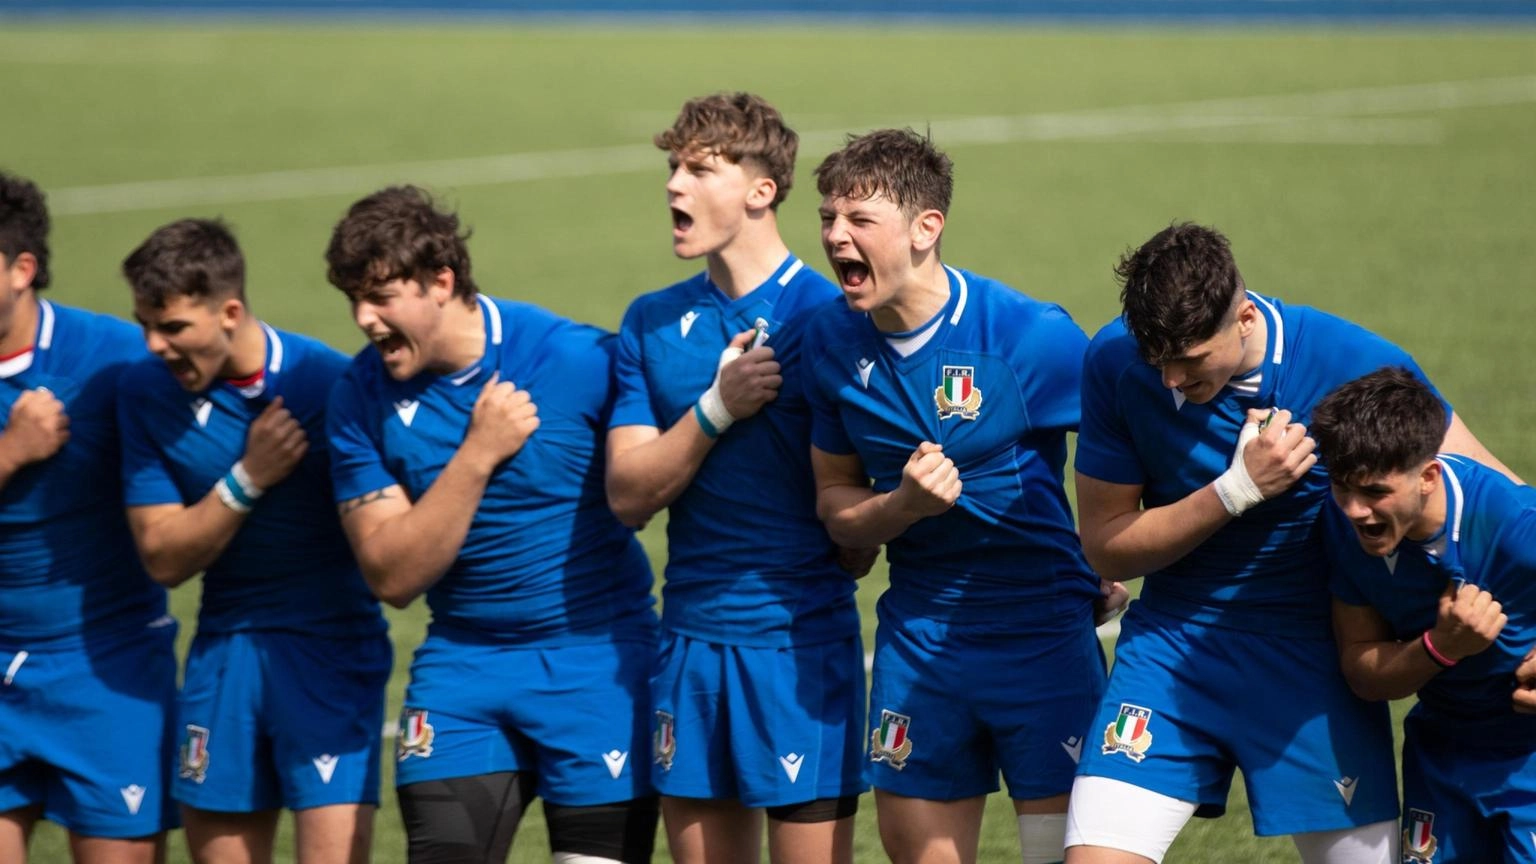 Rugby: Italia-Inghilterra U19 in anniversario sisma L'Aquila